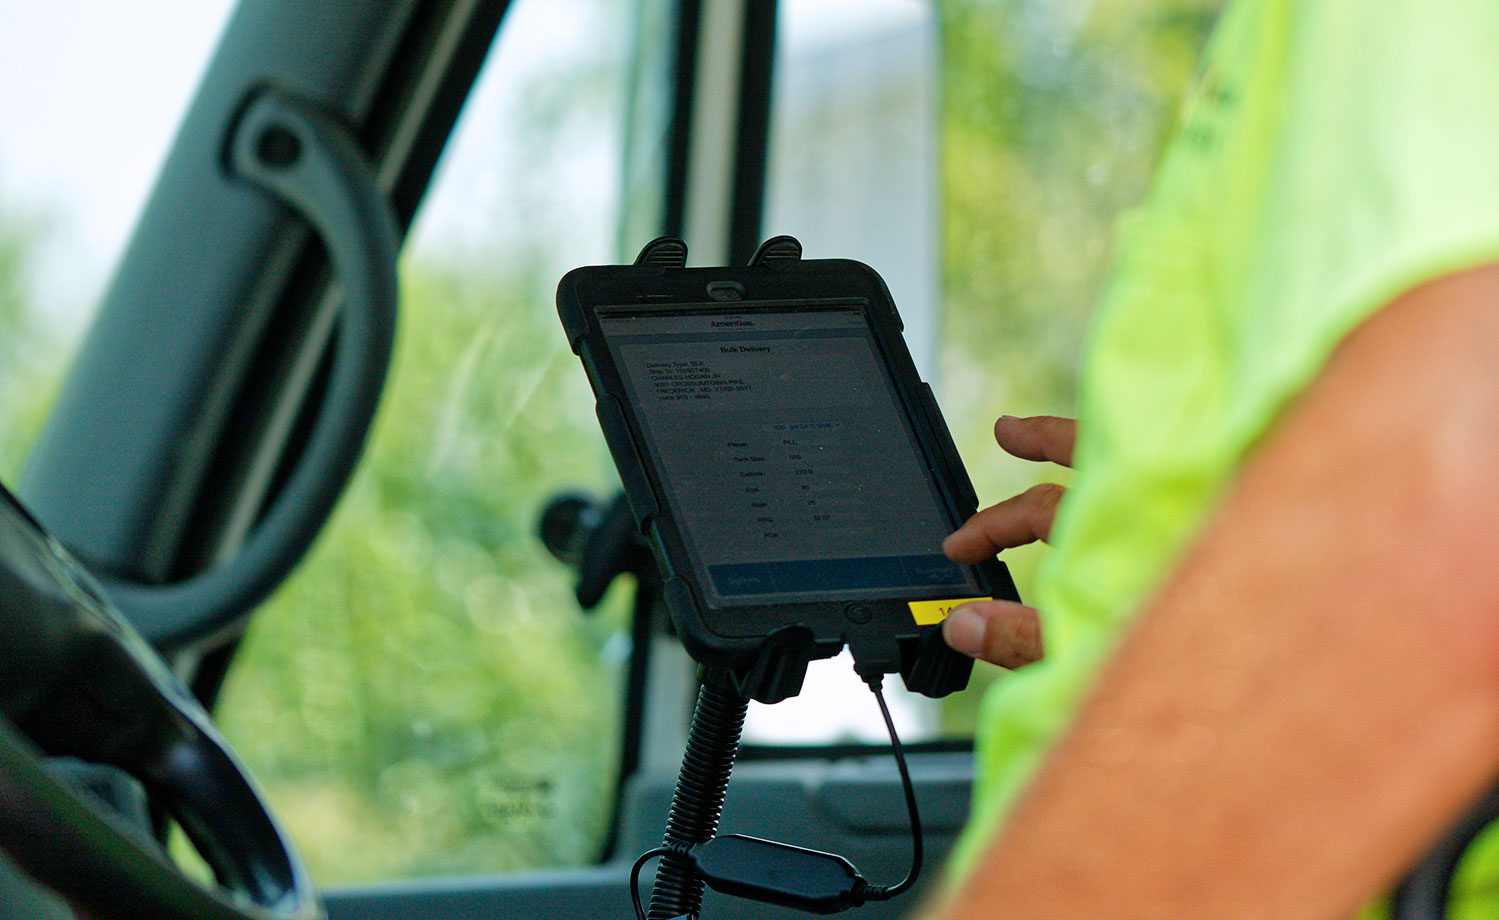 Digital tablet inside truck cabin.